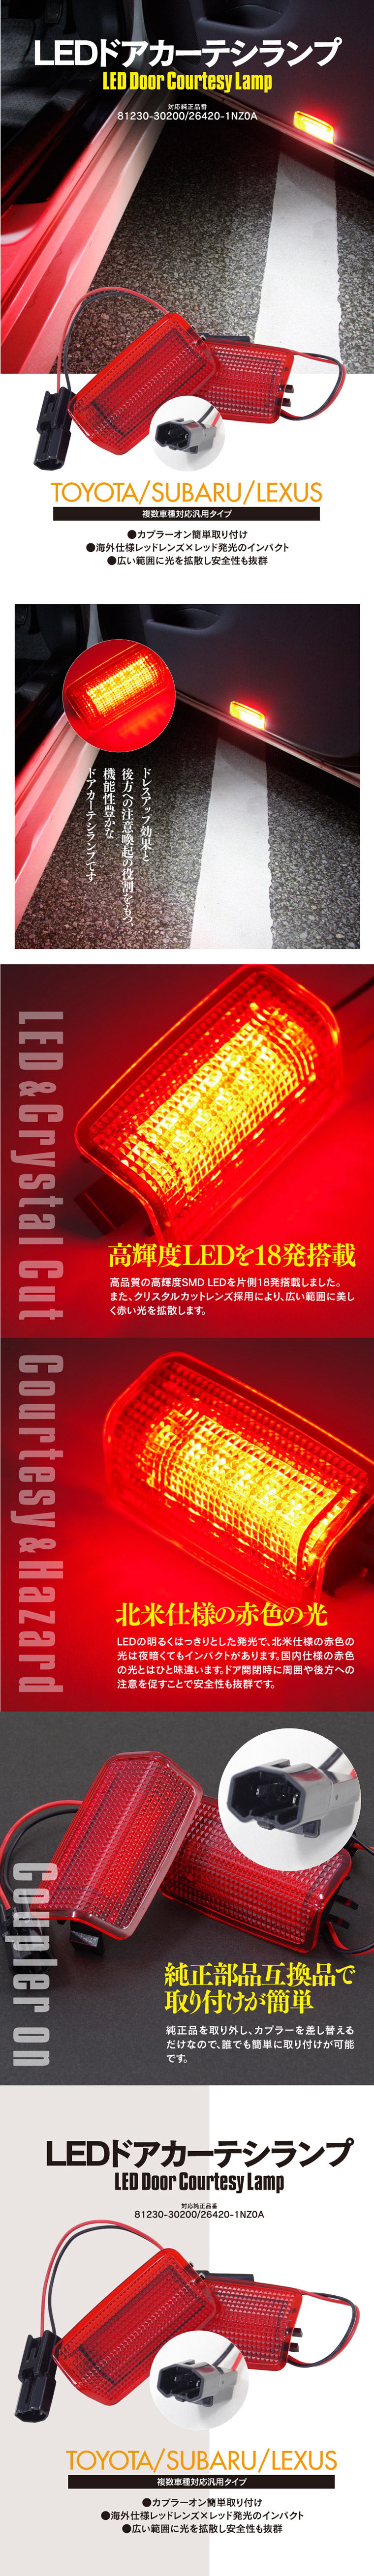 Azzurri】 LED カーテシランプ フットランプ レッド 赤 ドアランプ IS-F USE20 対応純正品番 81230-30200  26420-1NZ0A